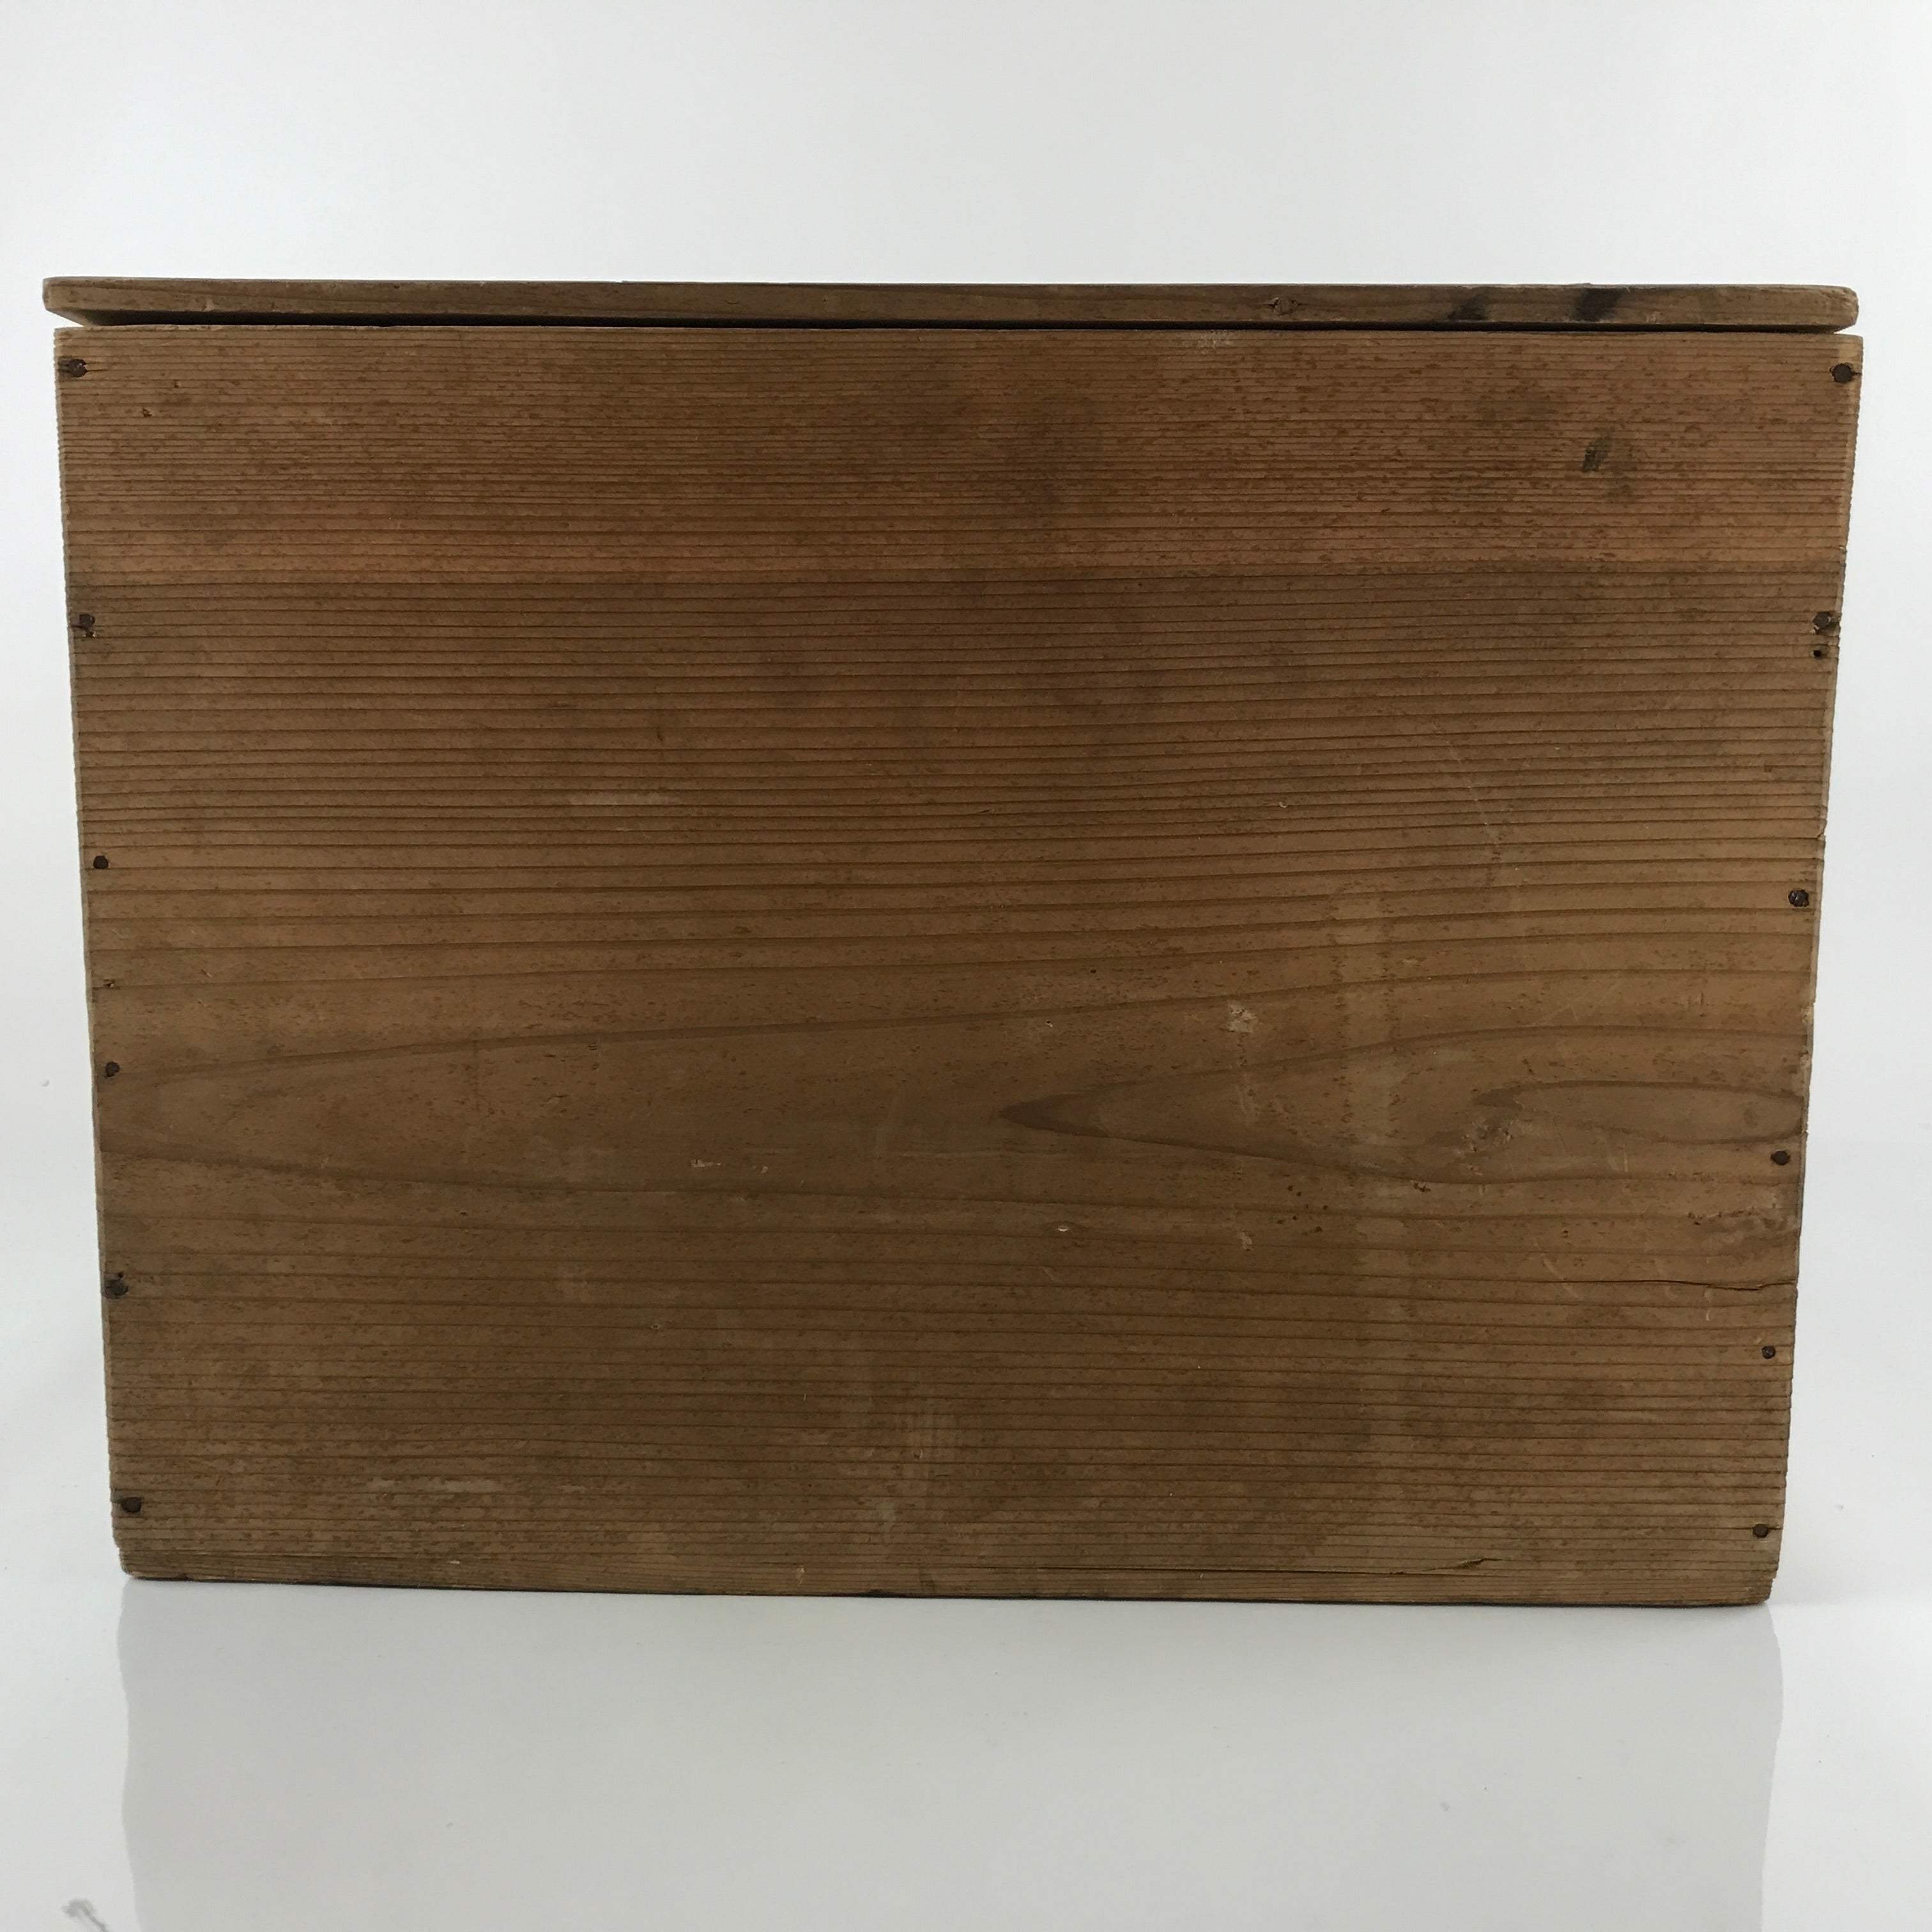 Vintage Japanese Wooden Lidded Storage Box Inside 37.5x42x31cm Large Brown X102